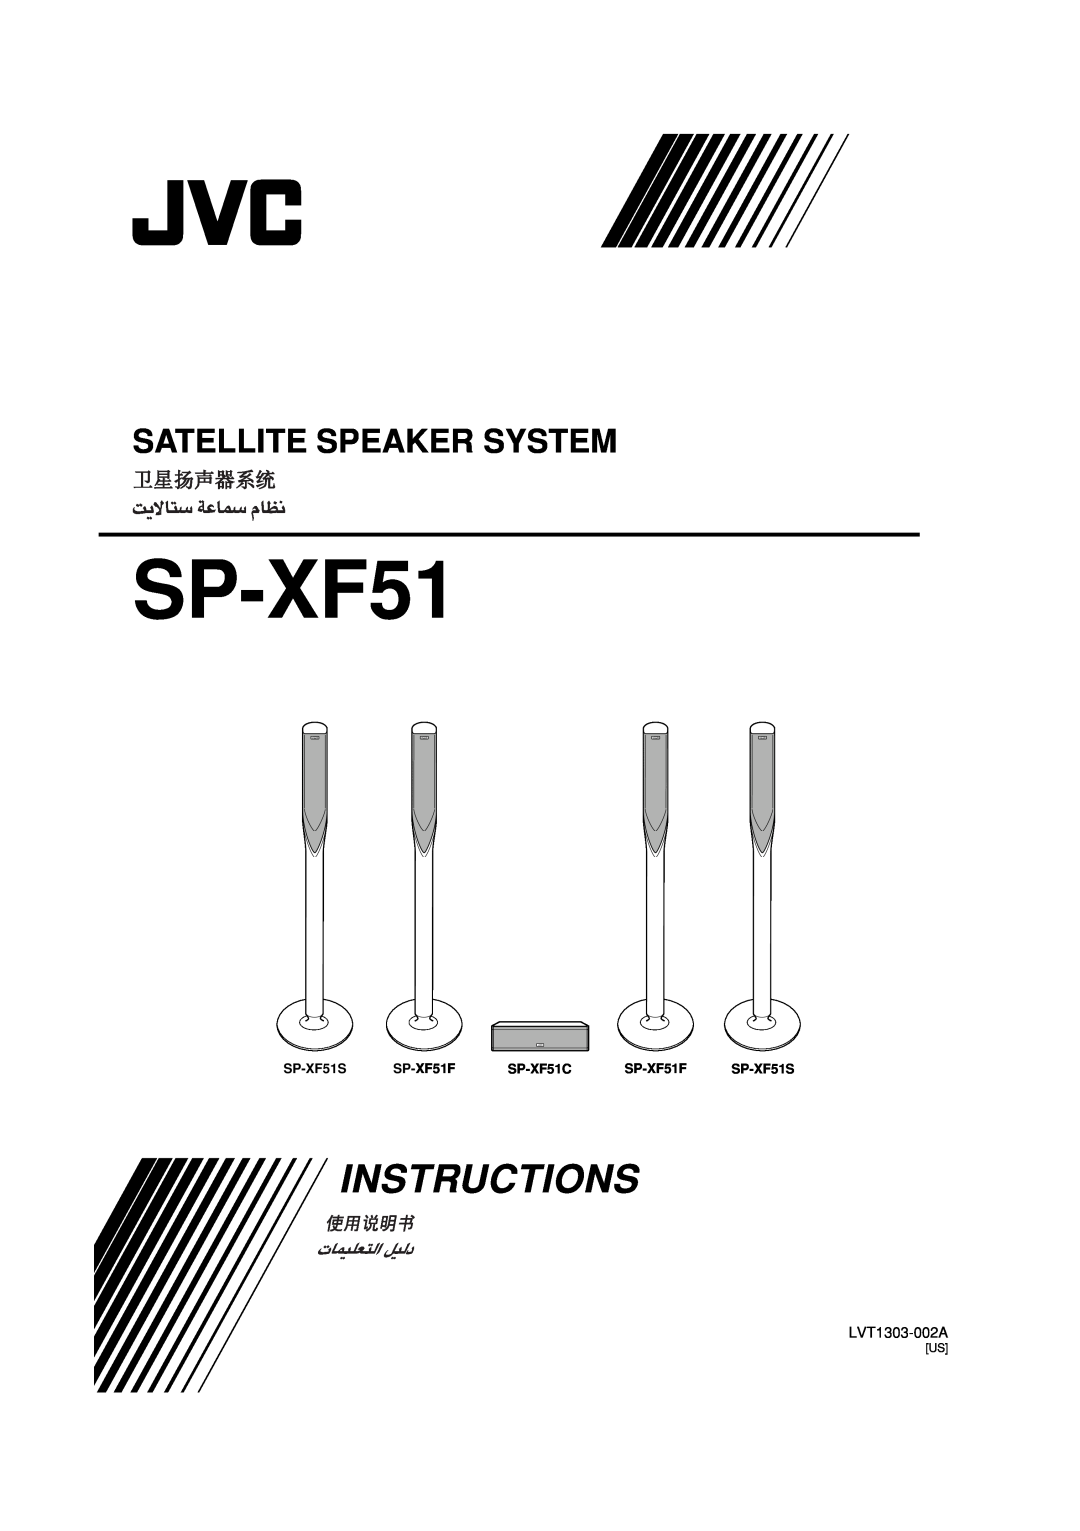 JVC SP-XF51F manual LVT1303-002A, SP-XF51S, SP-XF51C, Instructions, Satellite Speaker System 